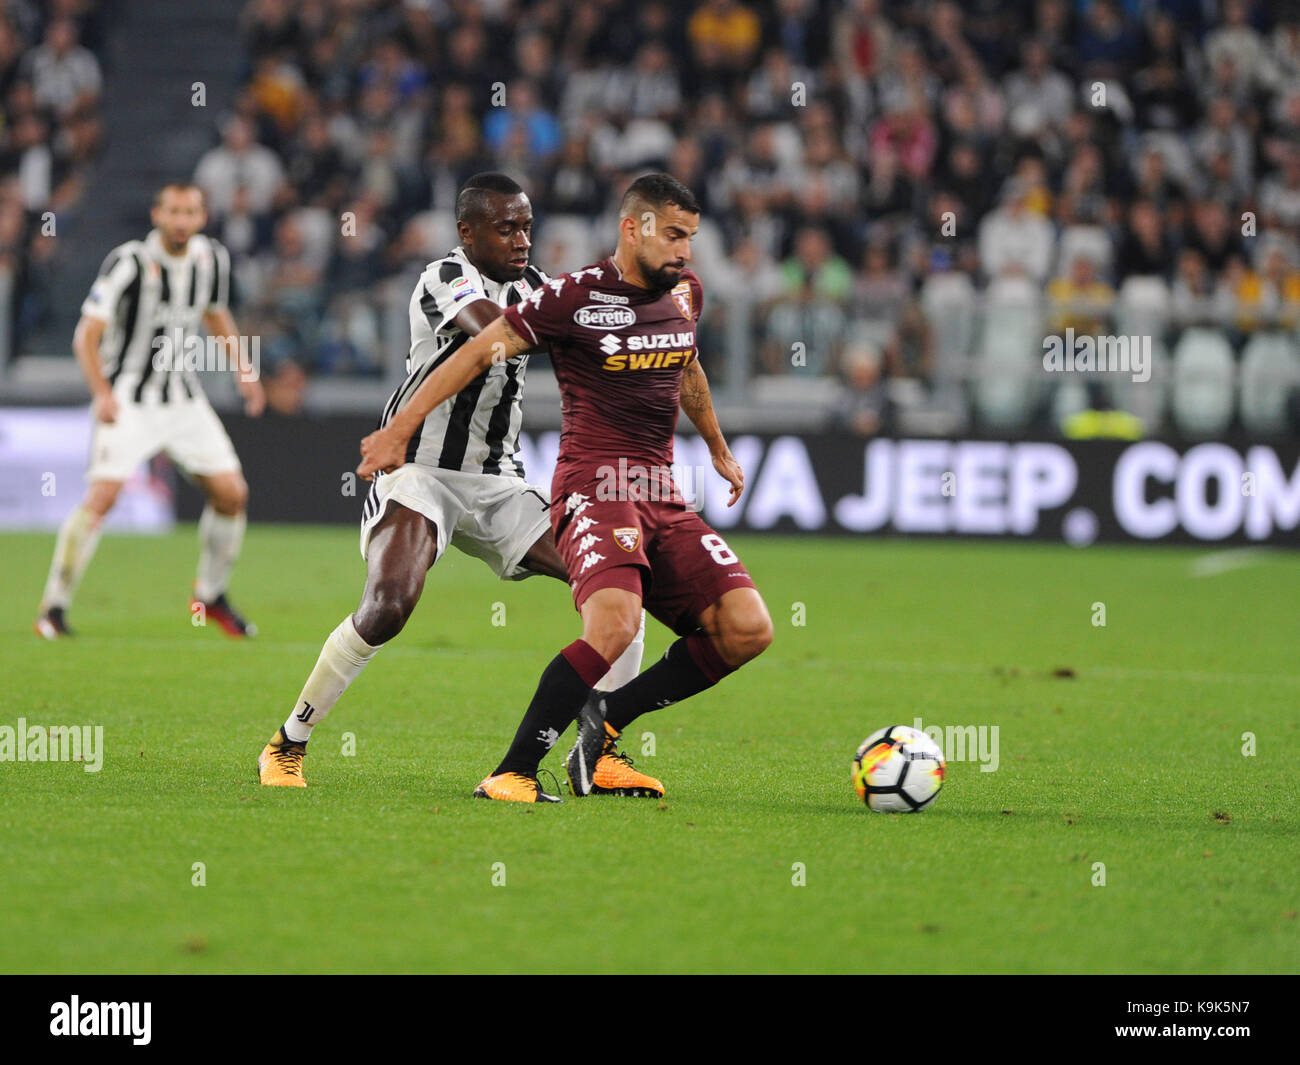 September 23, 2017 in Turin - Allianz Stadium Soccer match Juventus F.C. vs F.C. TORINO In picture:  Photo: Cronos/Claudio Benedetto Stock Photo